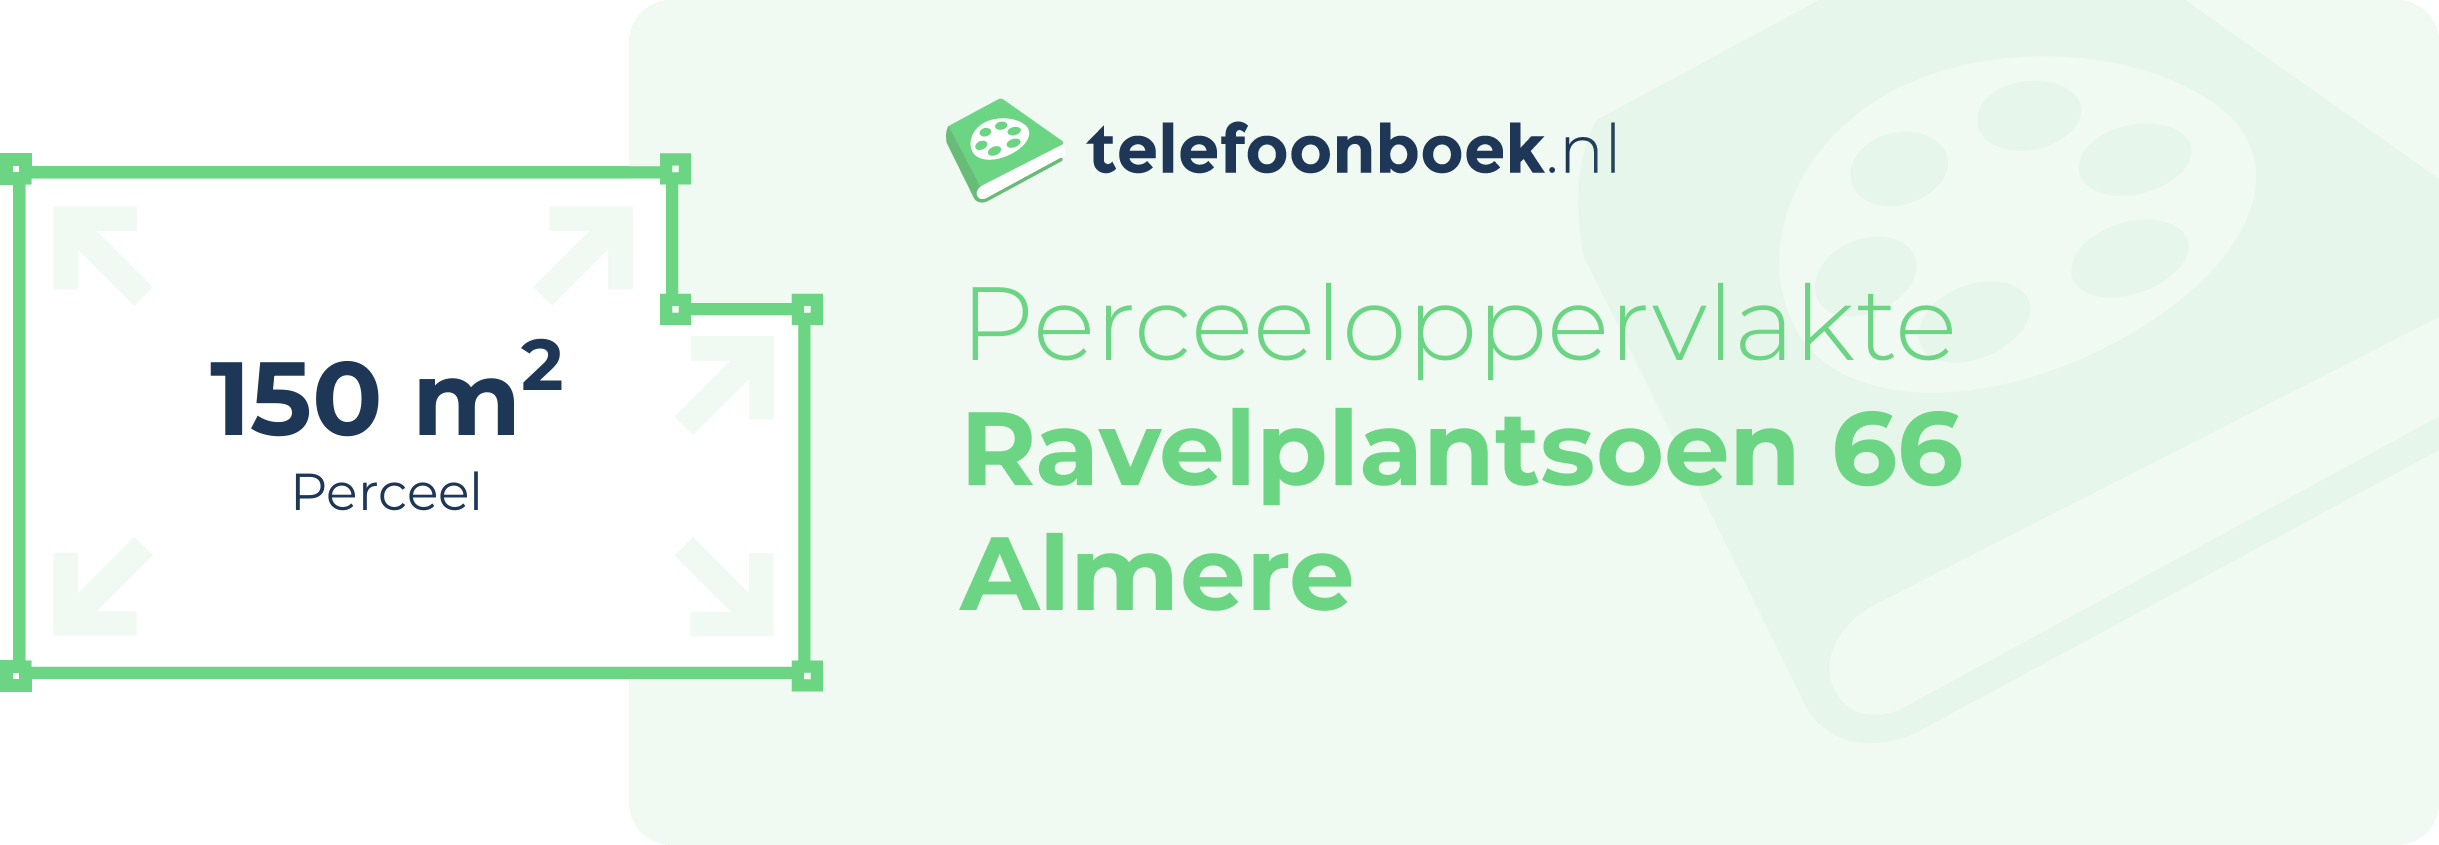 Perceeloppervlakte Ravelplantsoen 66 Almere